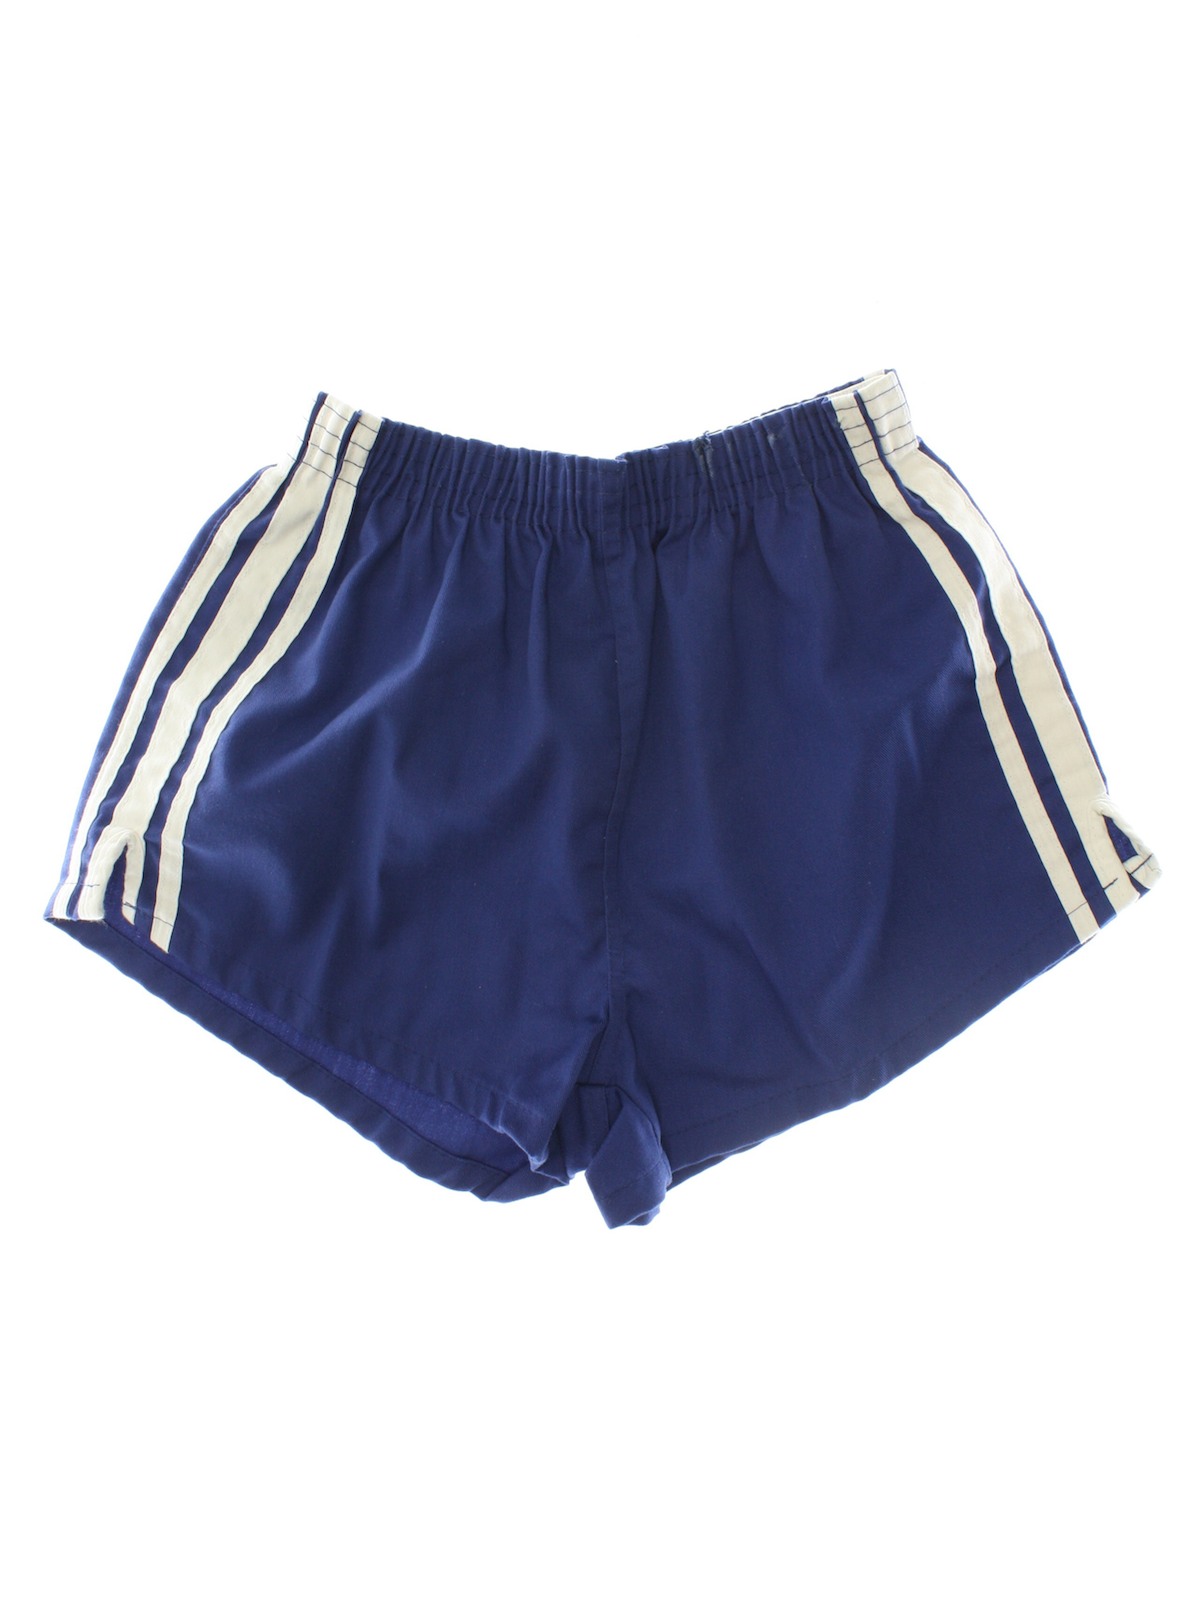 Retro 1980's Shorts (Athletic Short) : 80s -Athletic Short- Mens royal ...